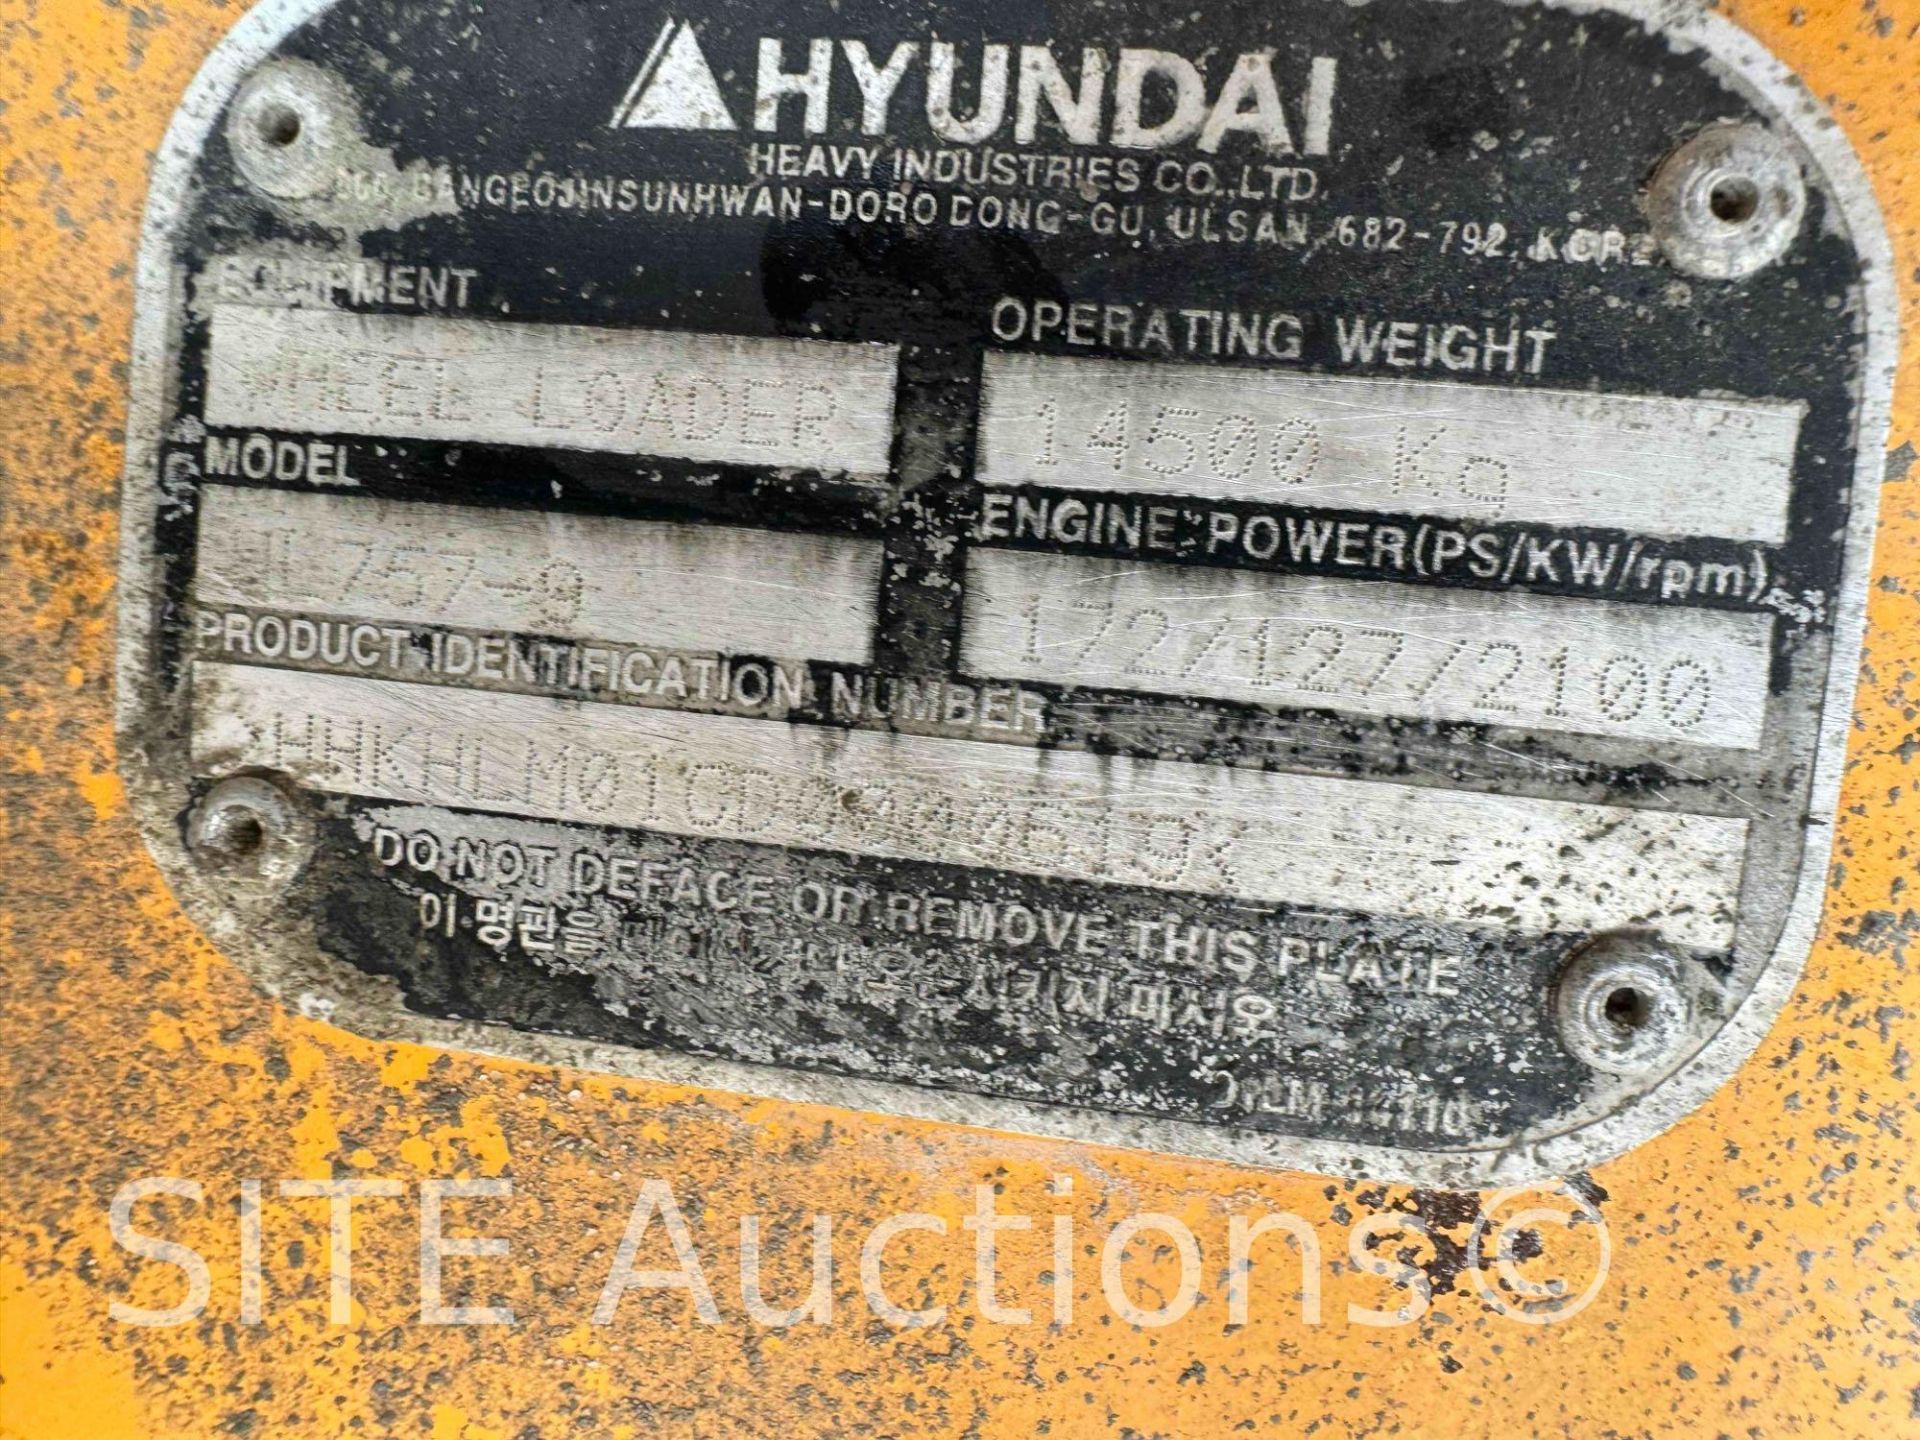 2013 Hyundai HL757-9 Wheel Loader - Image 9 of 43